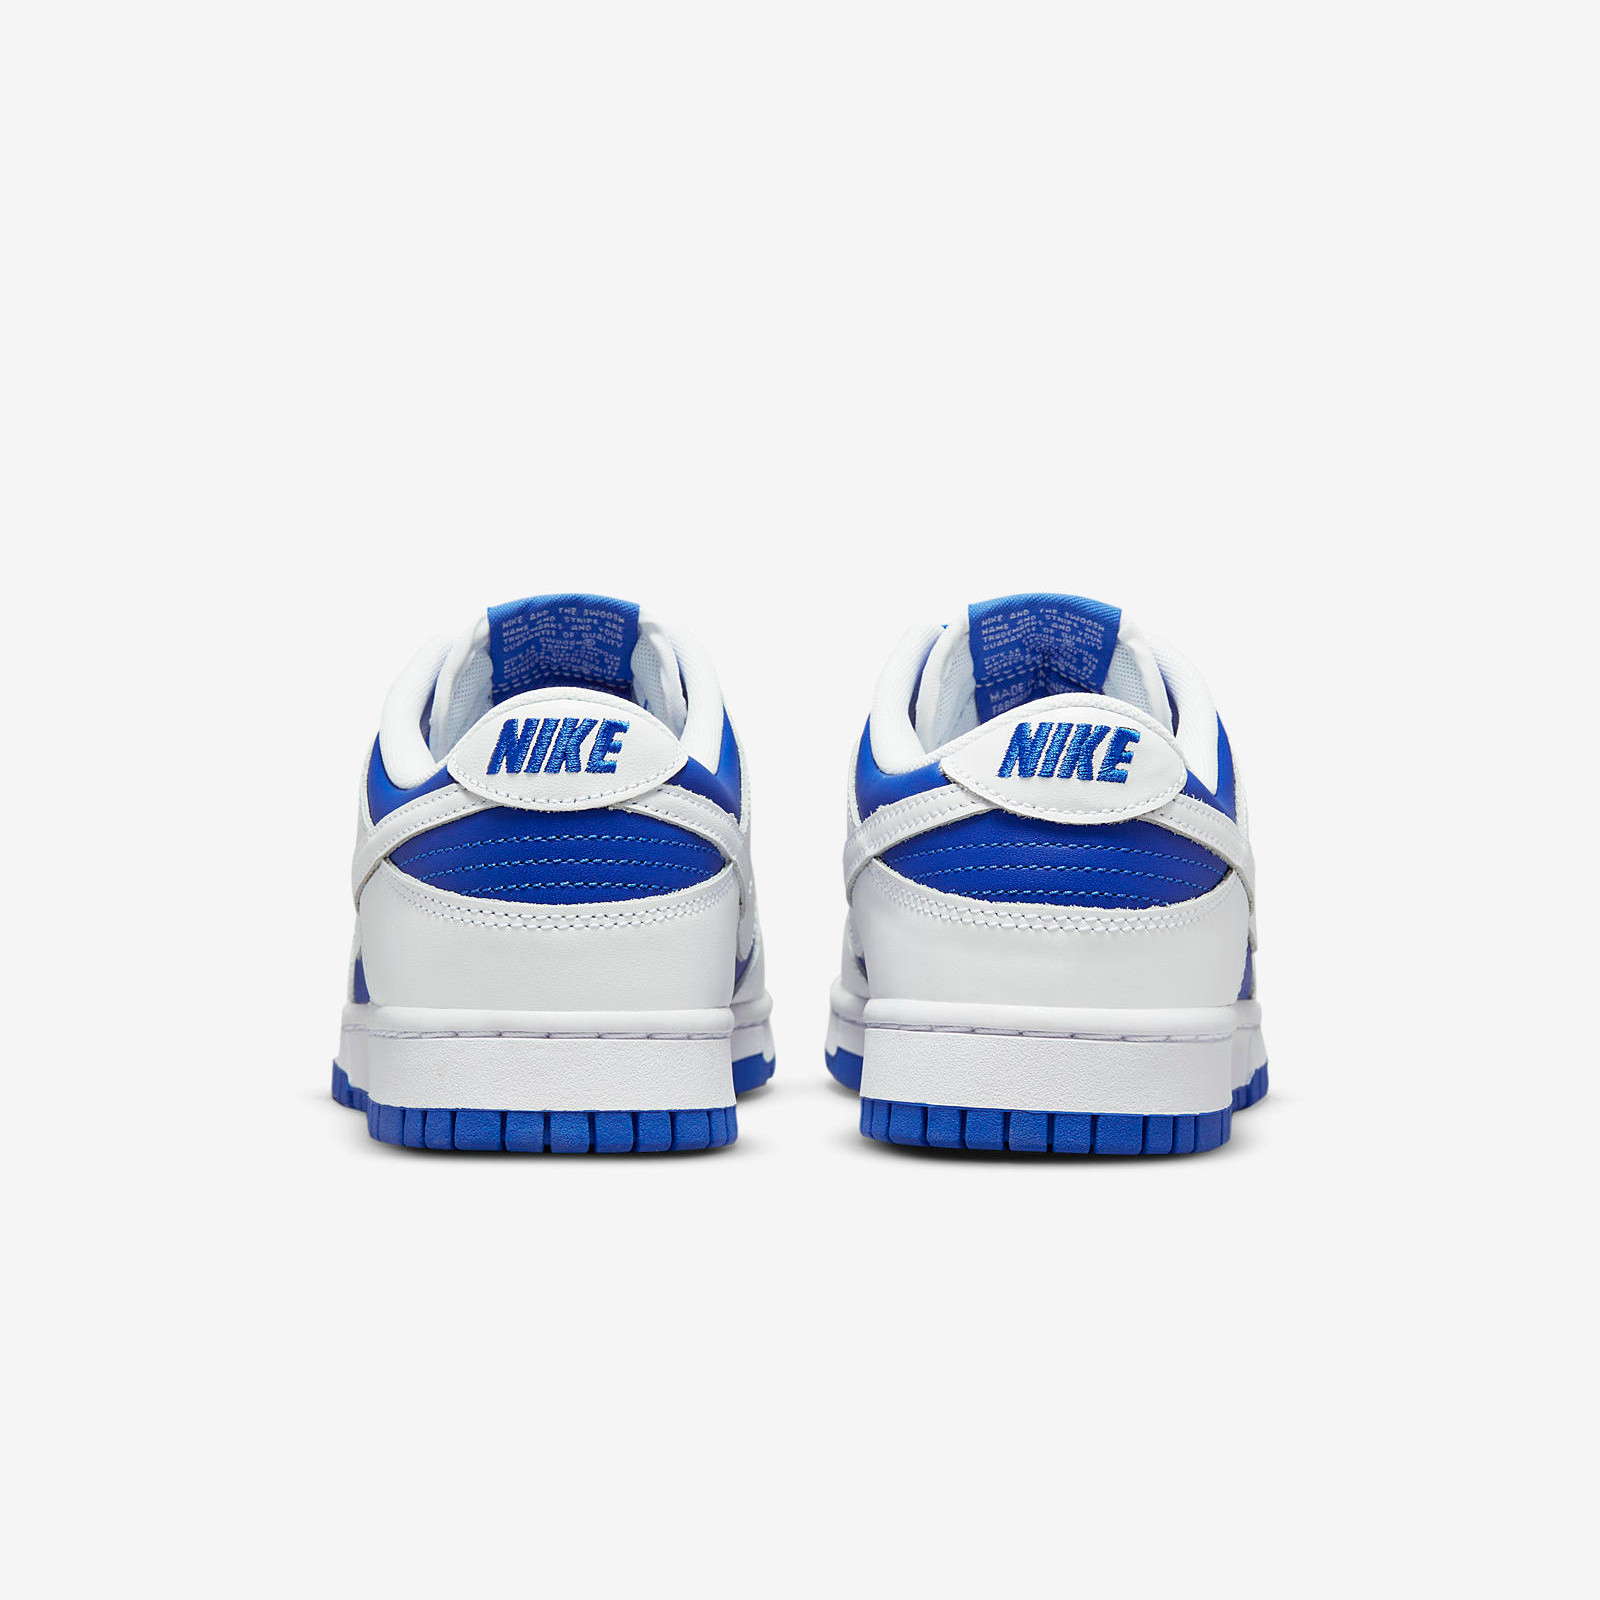 Nike Dunk Low
« Racer Blue »